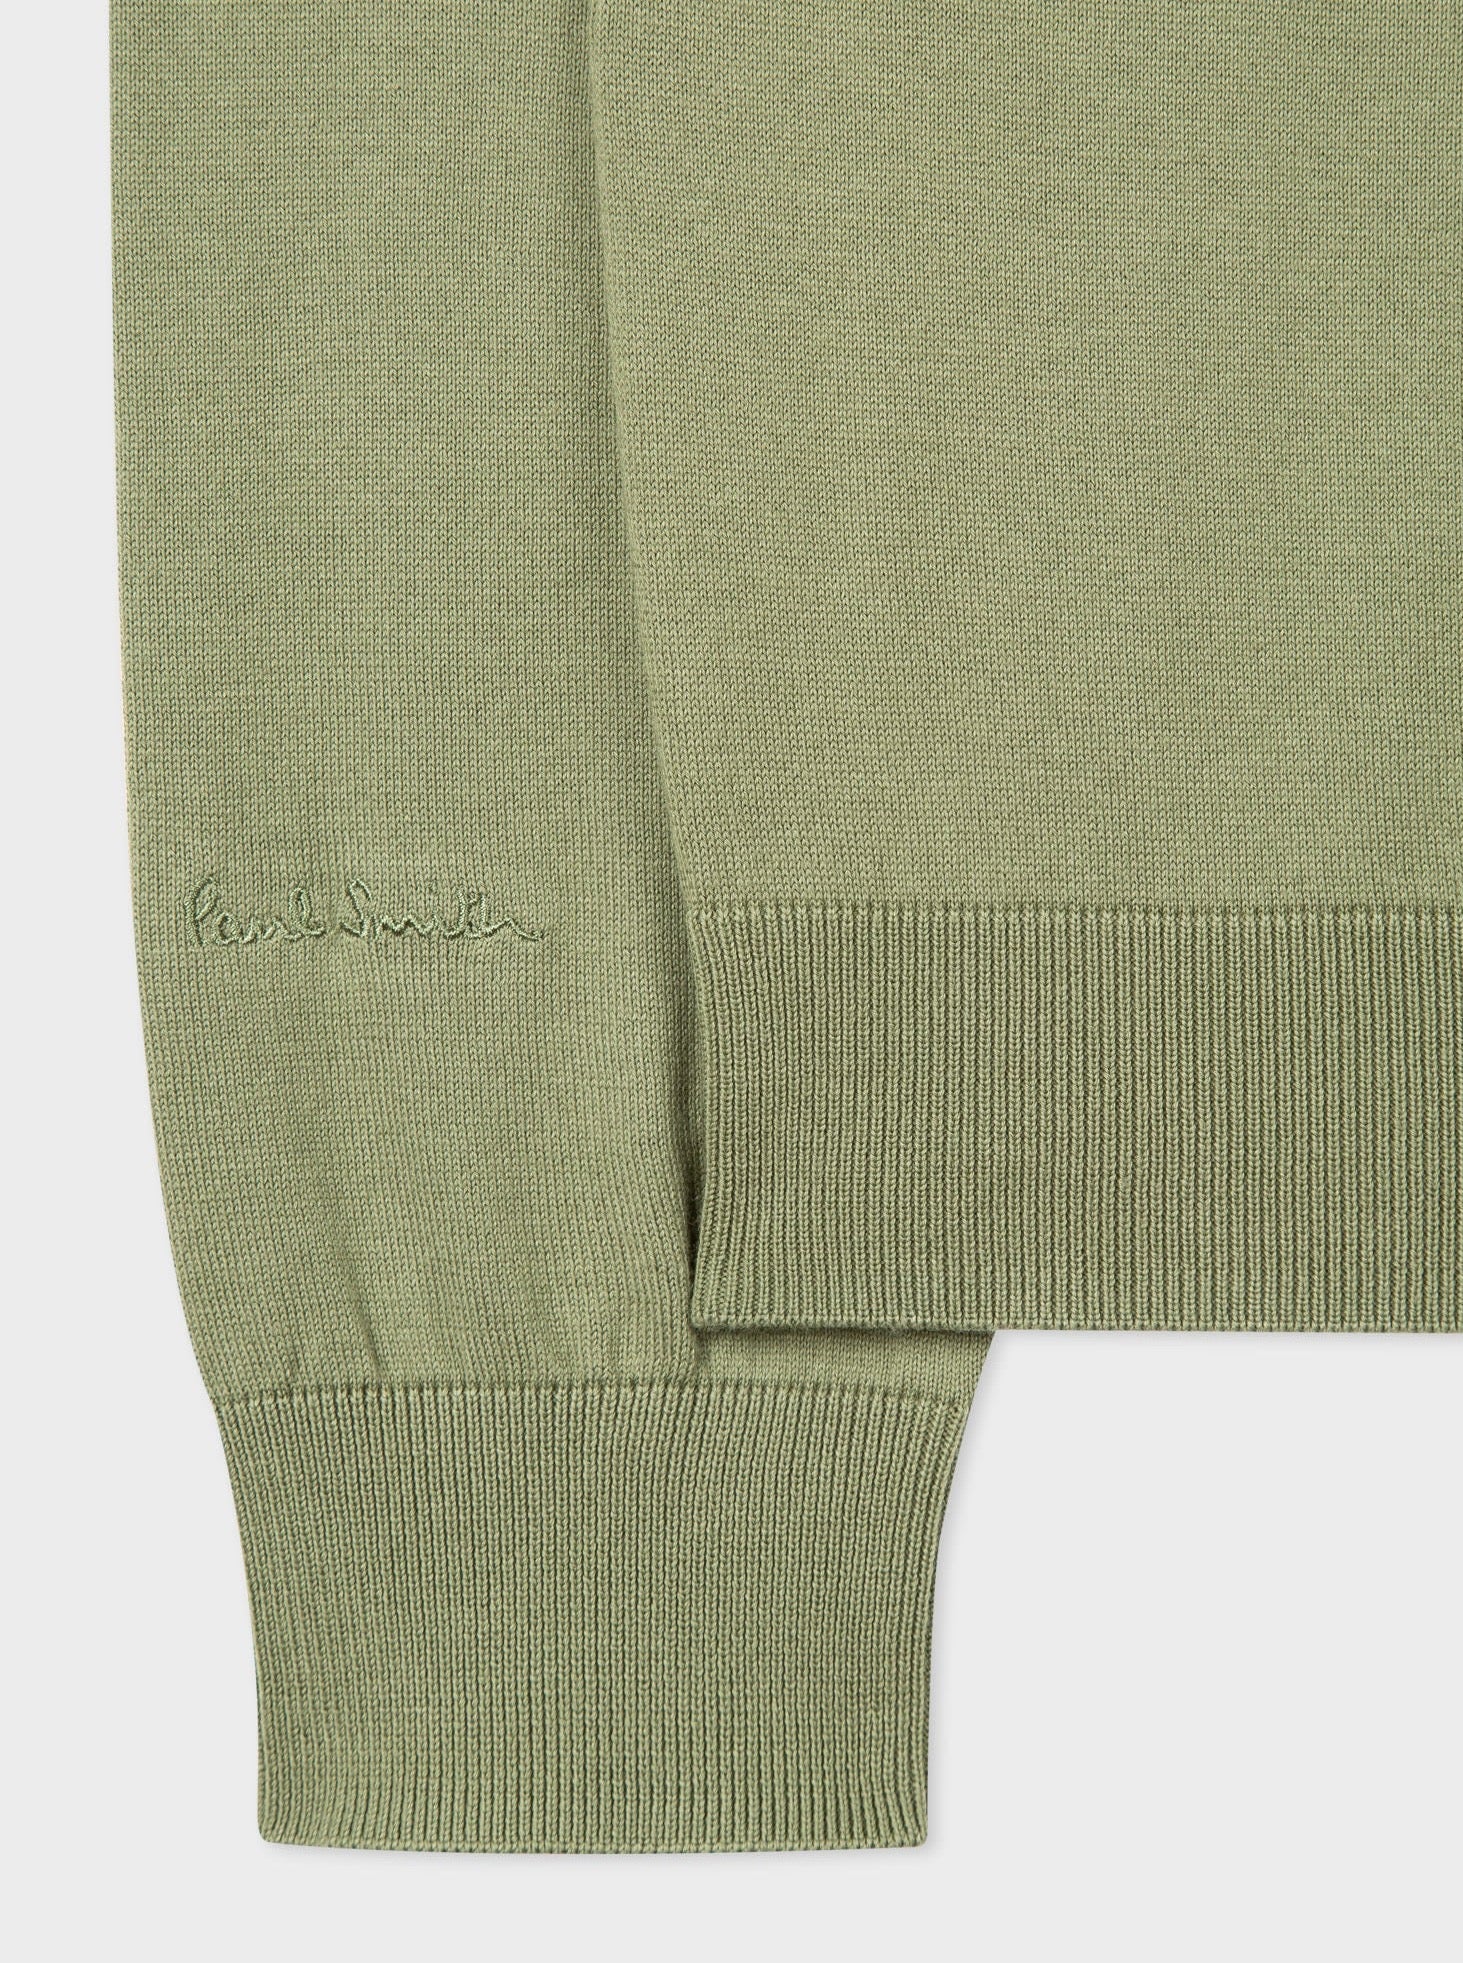 Light Green Cotton Contrast-Collar Sweater